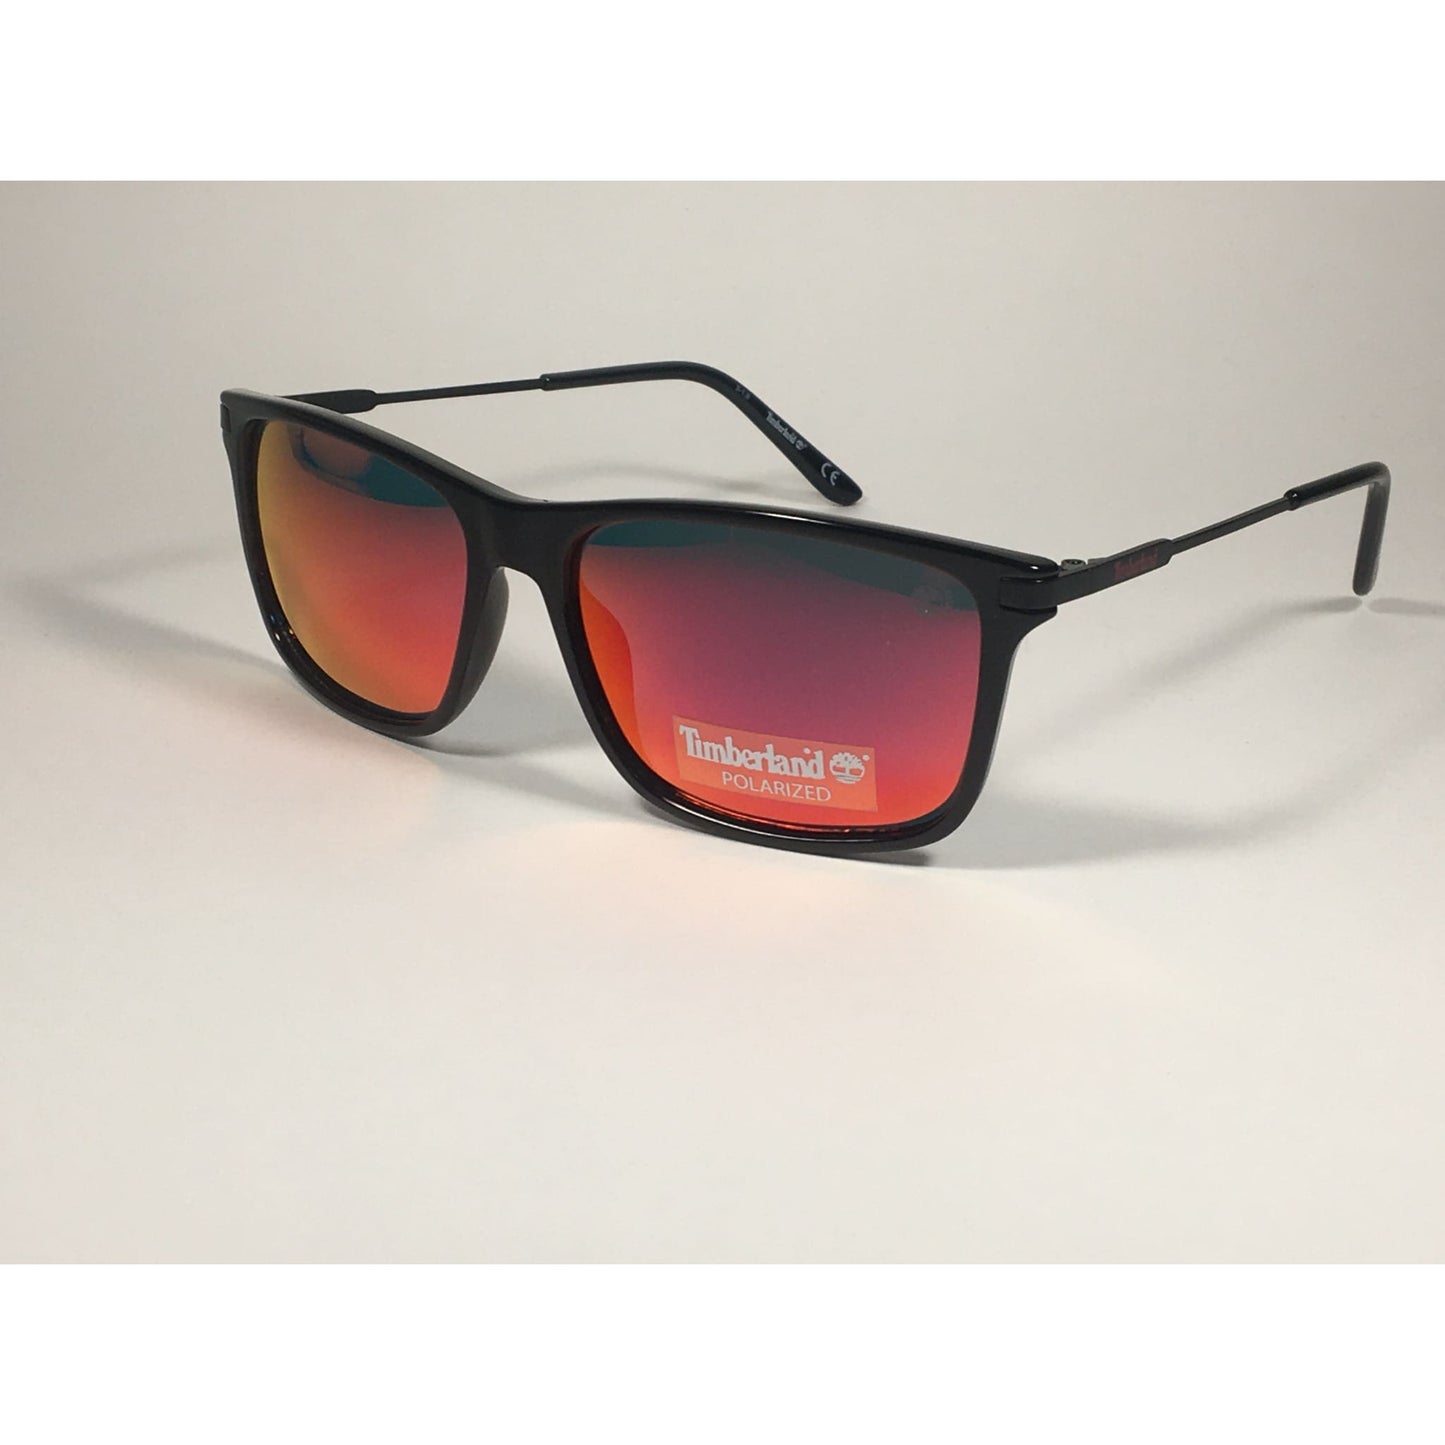 Timberland Polarized Square Sunglasses Black Infrared Red Orange Mirror Lens TB7177 01D - Sunglasses